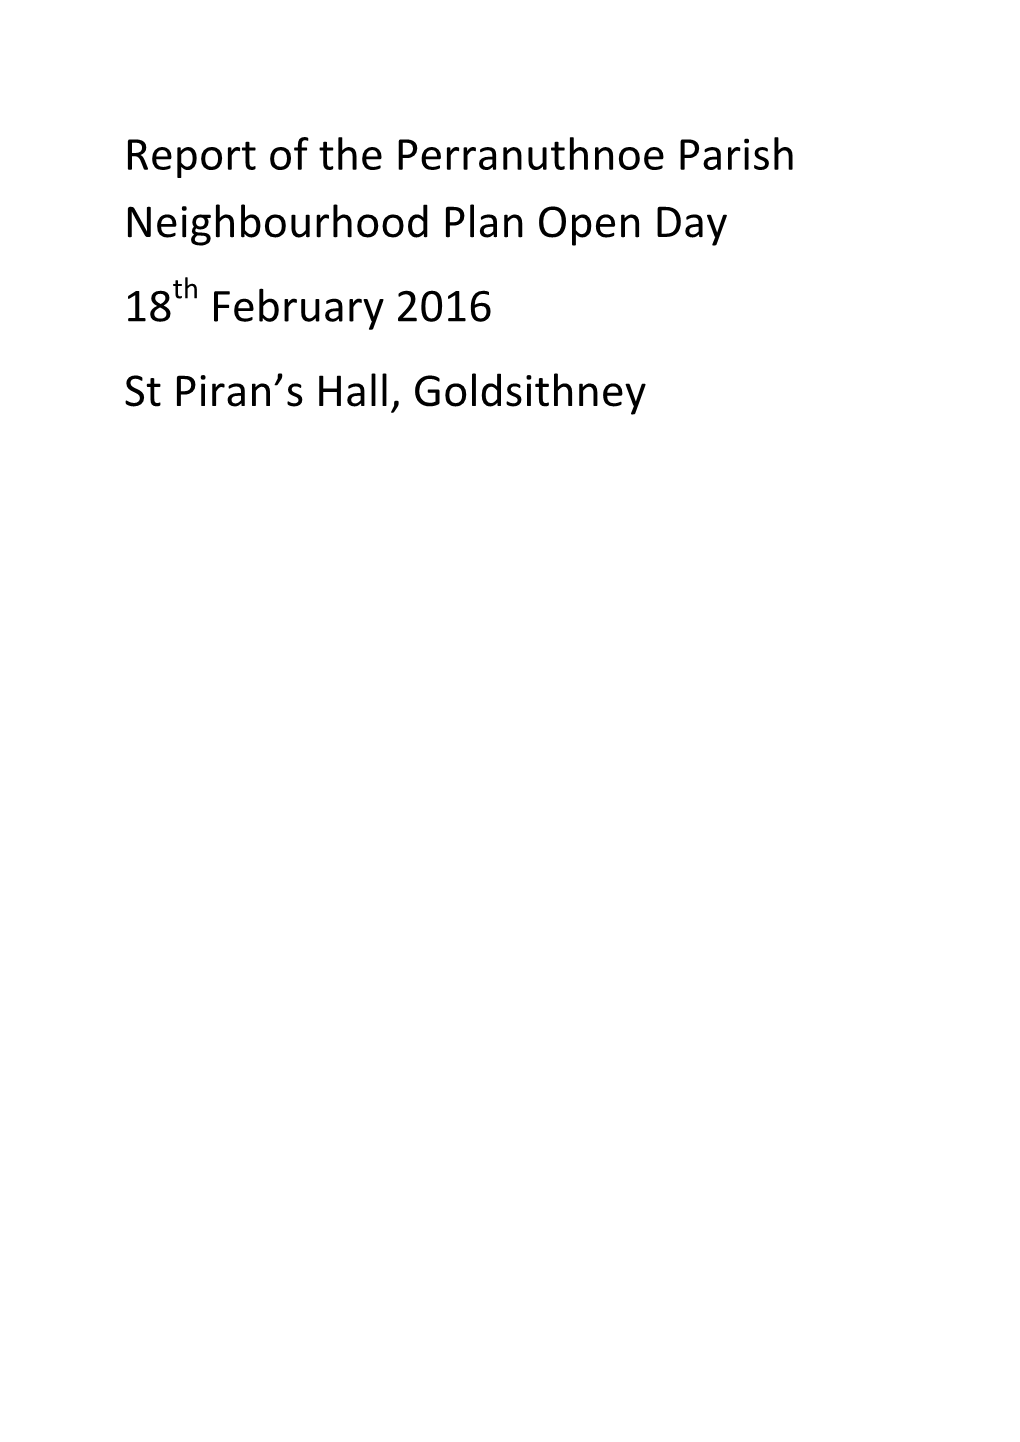 Report of the Perranuthnoe Parish Neighbourhood Plan Open Day 18 February 2016 St Piran's Hall, Goldsithney